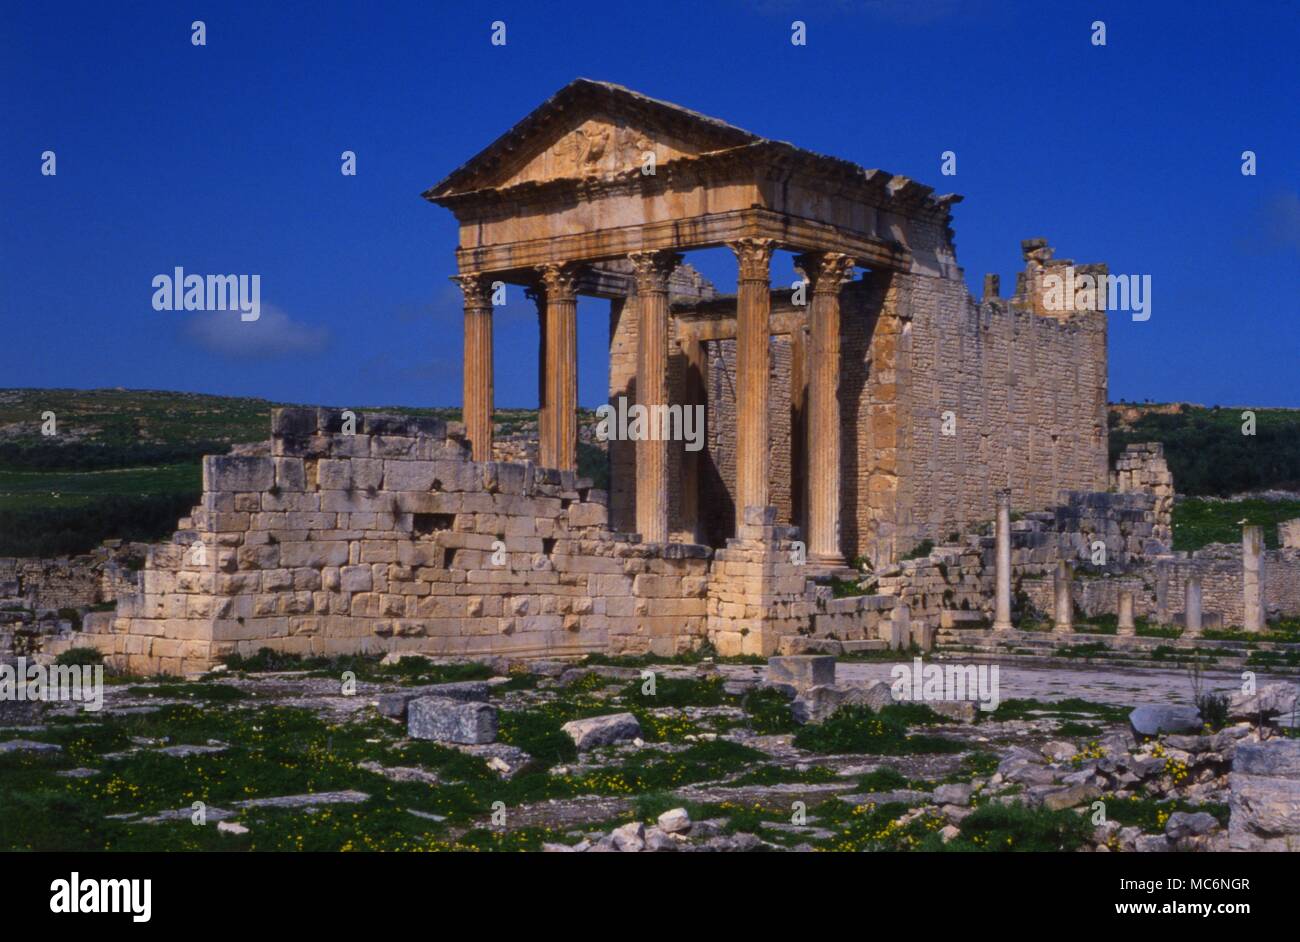 The ancient Roman Capitol in the city of Dougga, Tunisia. Stock Photo